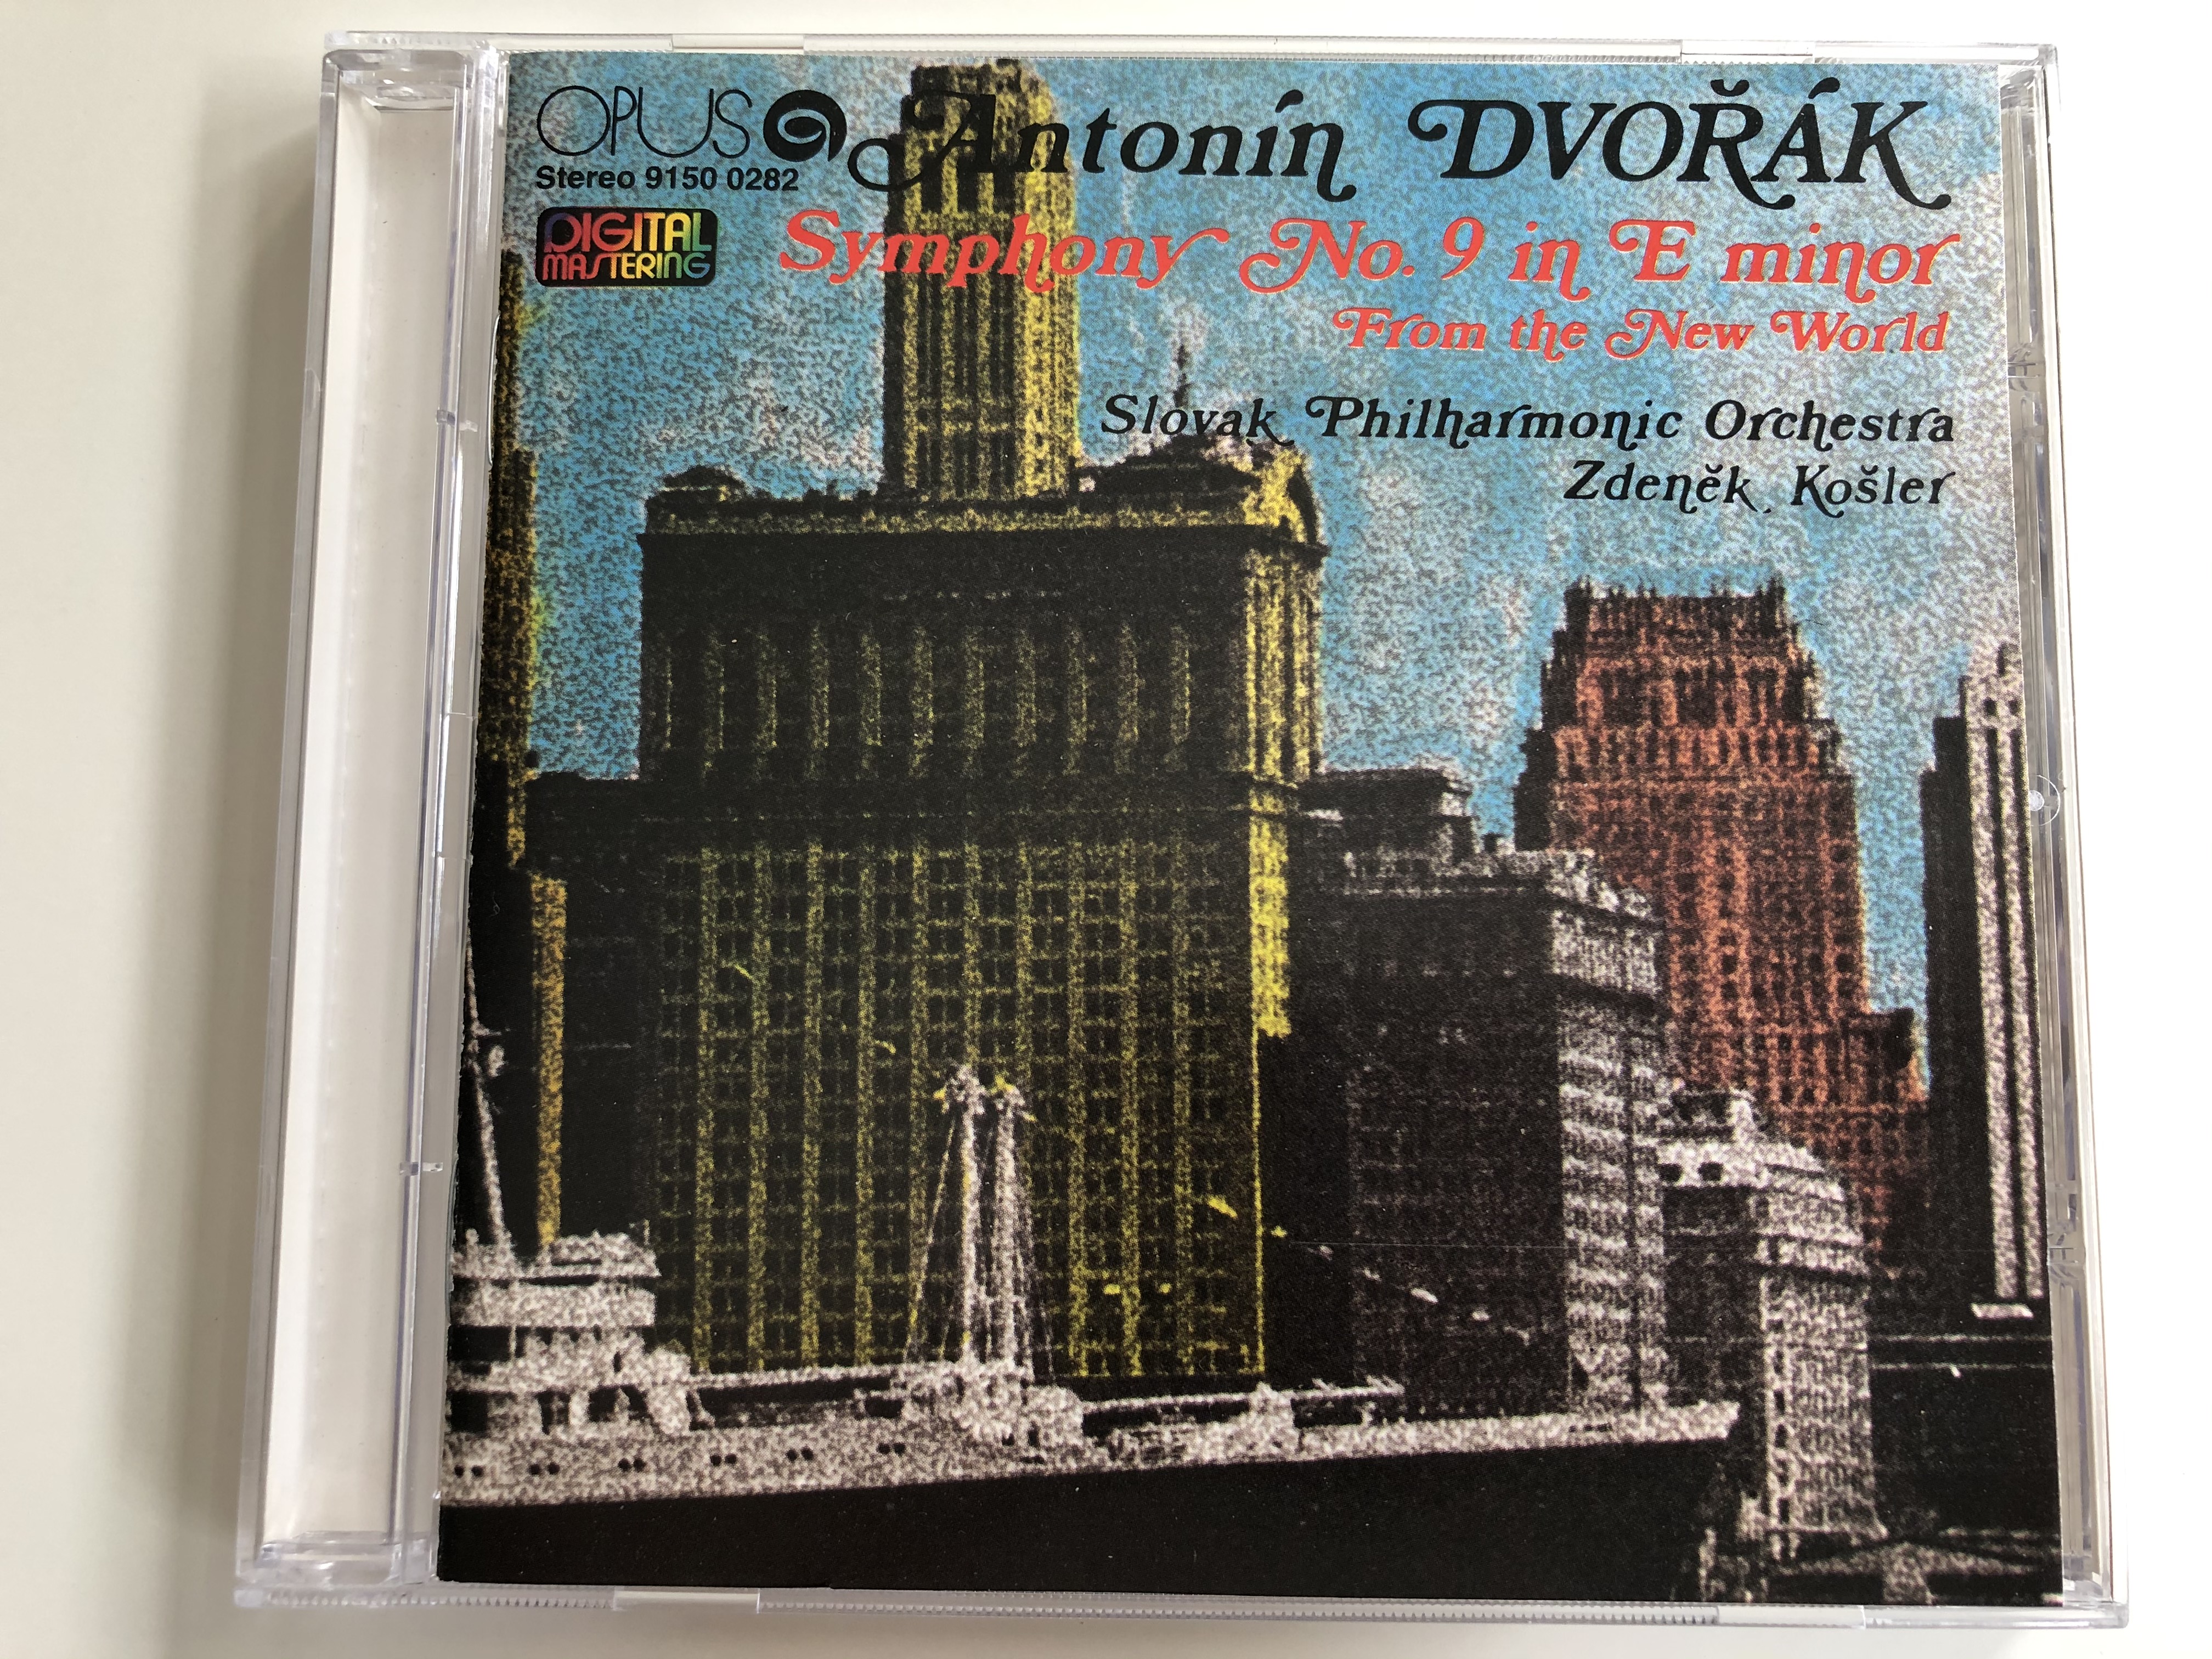 antonin-dvorak-symphony-no.-9-in-e-minor-from-the-new-world-slovak-philharmonic-orchestra-zdenek-ko-ler-opus-audio-cd-1979-stereo-9150-0282-1-.jpg